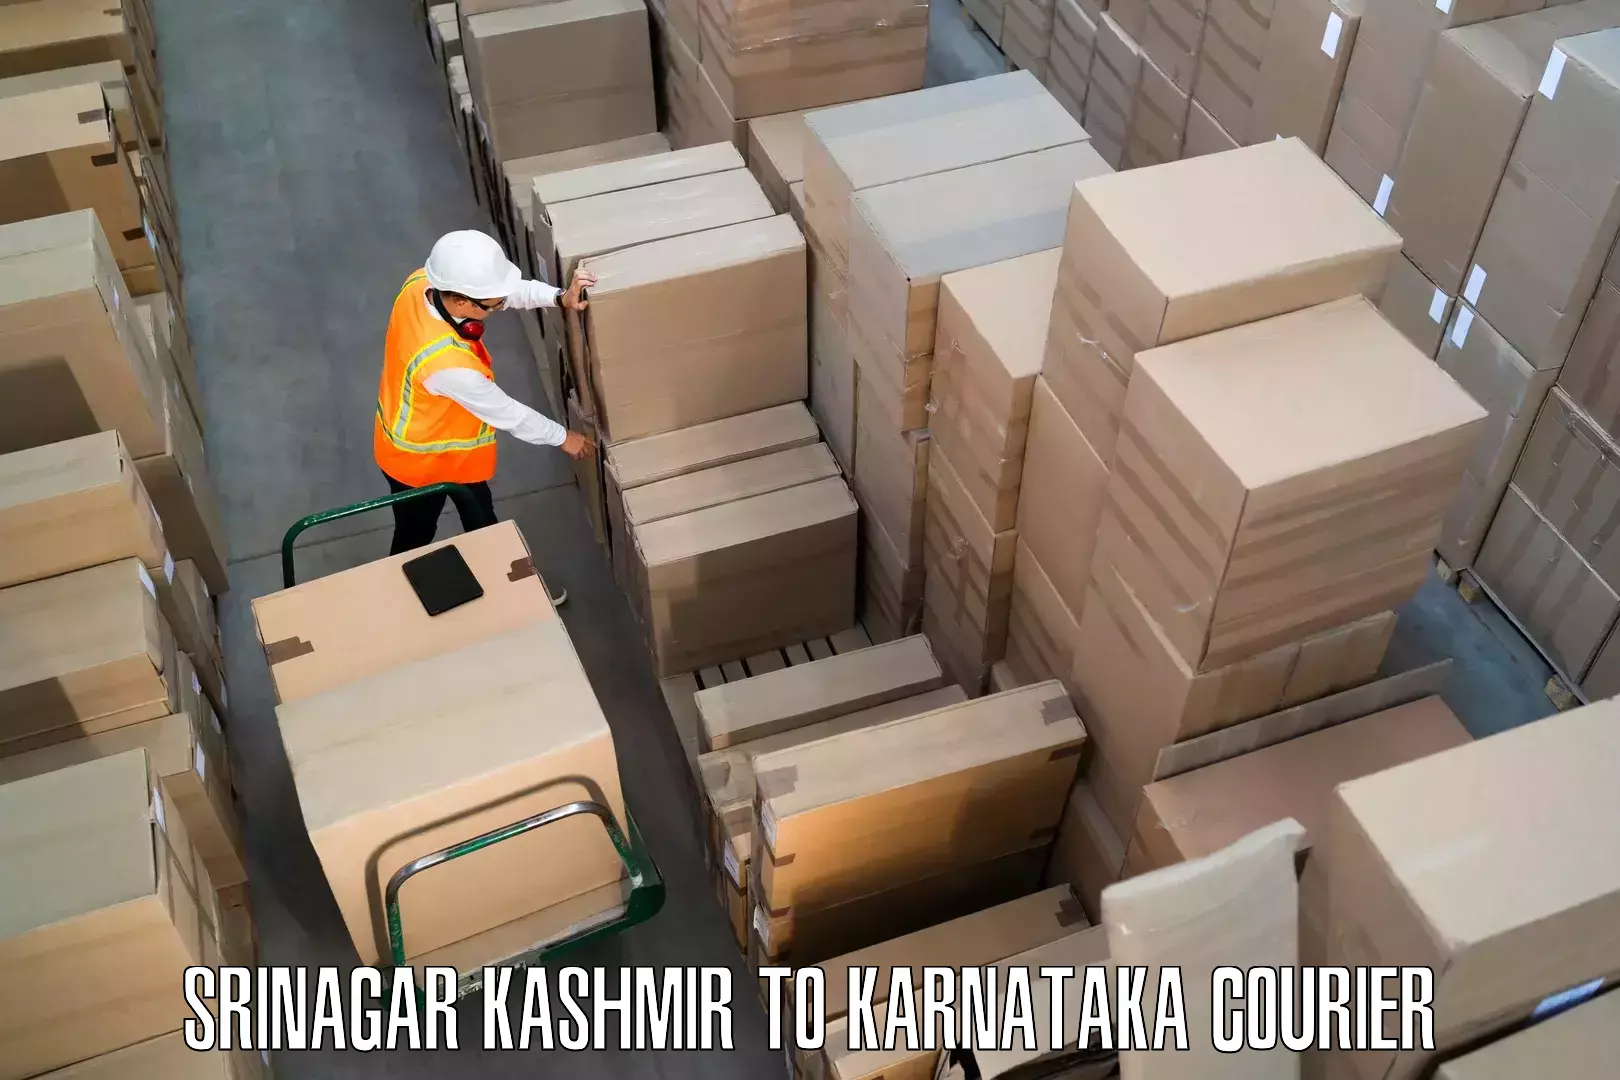 Professional moving company Srinagar Kashmir to Chamarajanagar